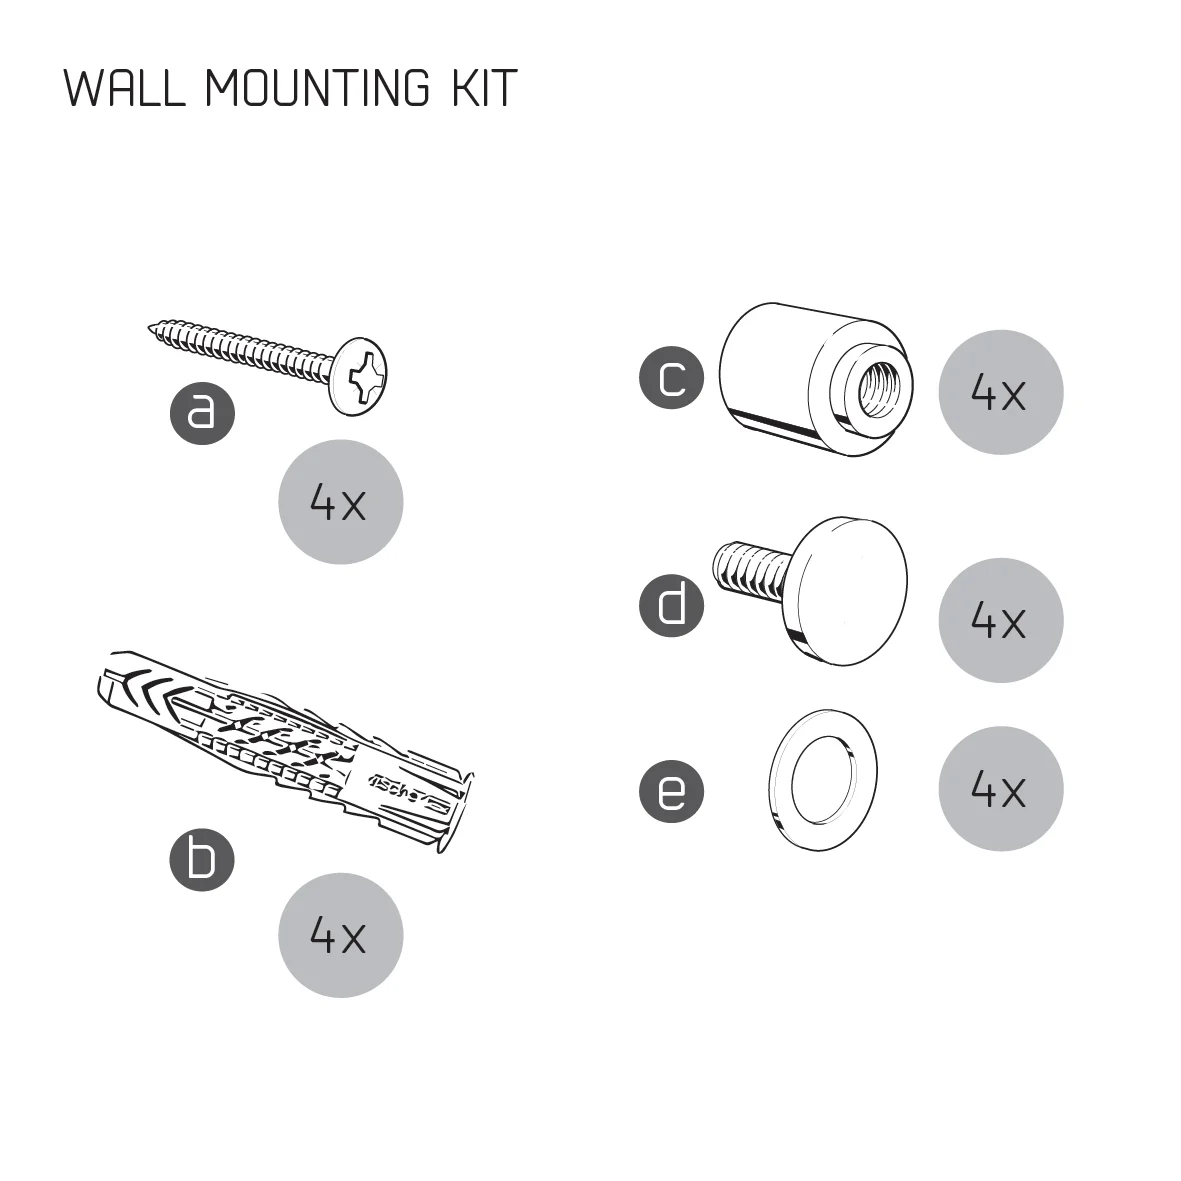 Wall mounting kit